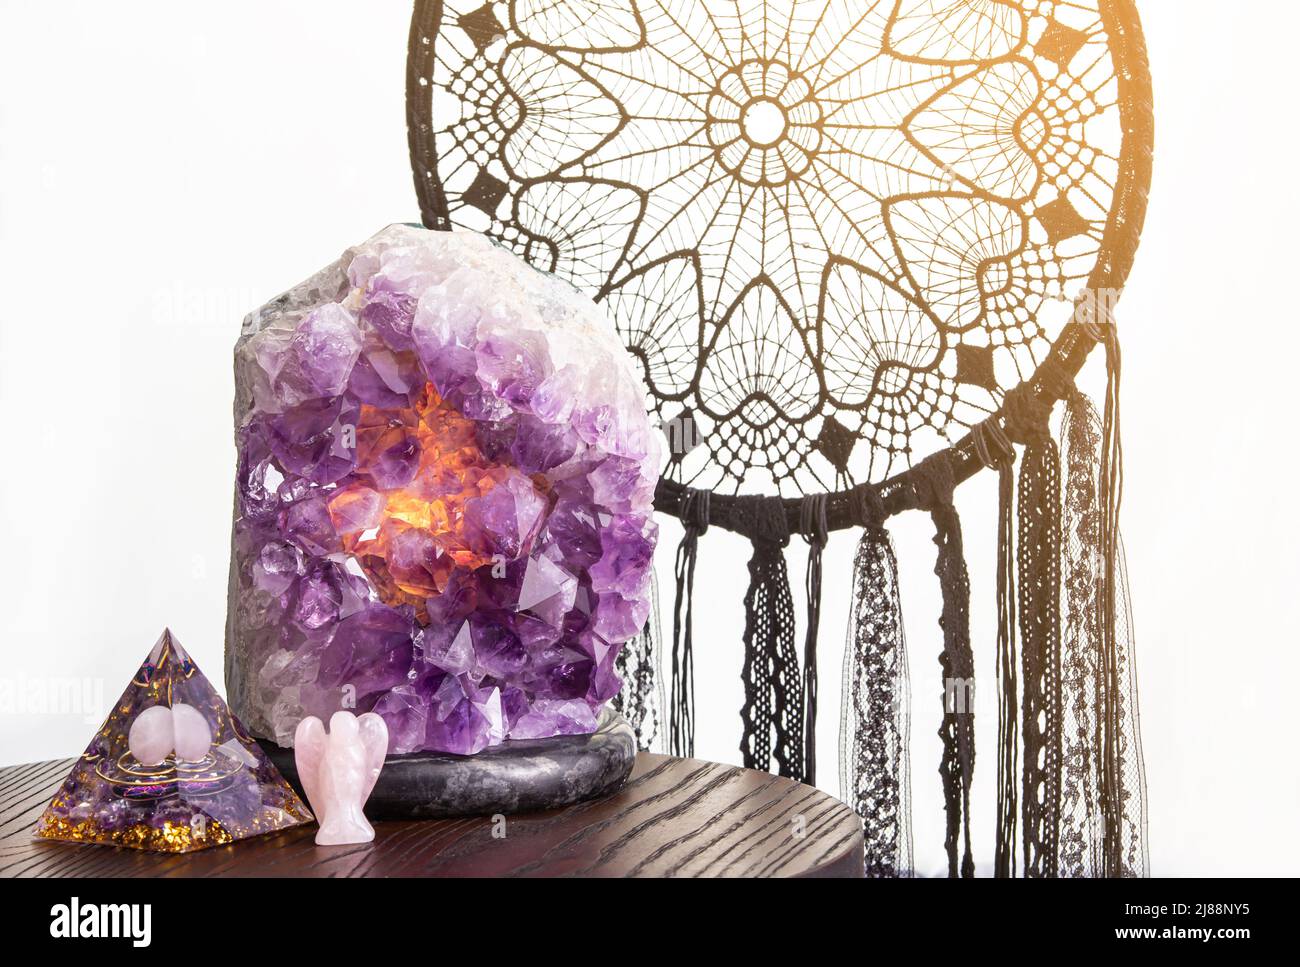 Spiritual home decor concept. Various elements: Orgonite or Orgone pyramid, black color dream catcher, rose quartz angel shape figurine. Stock Photo